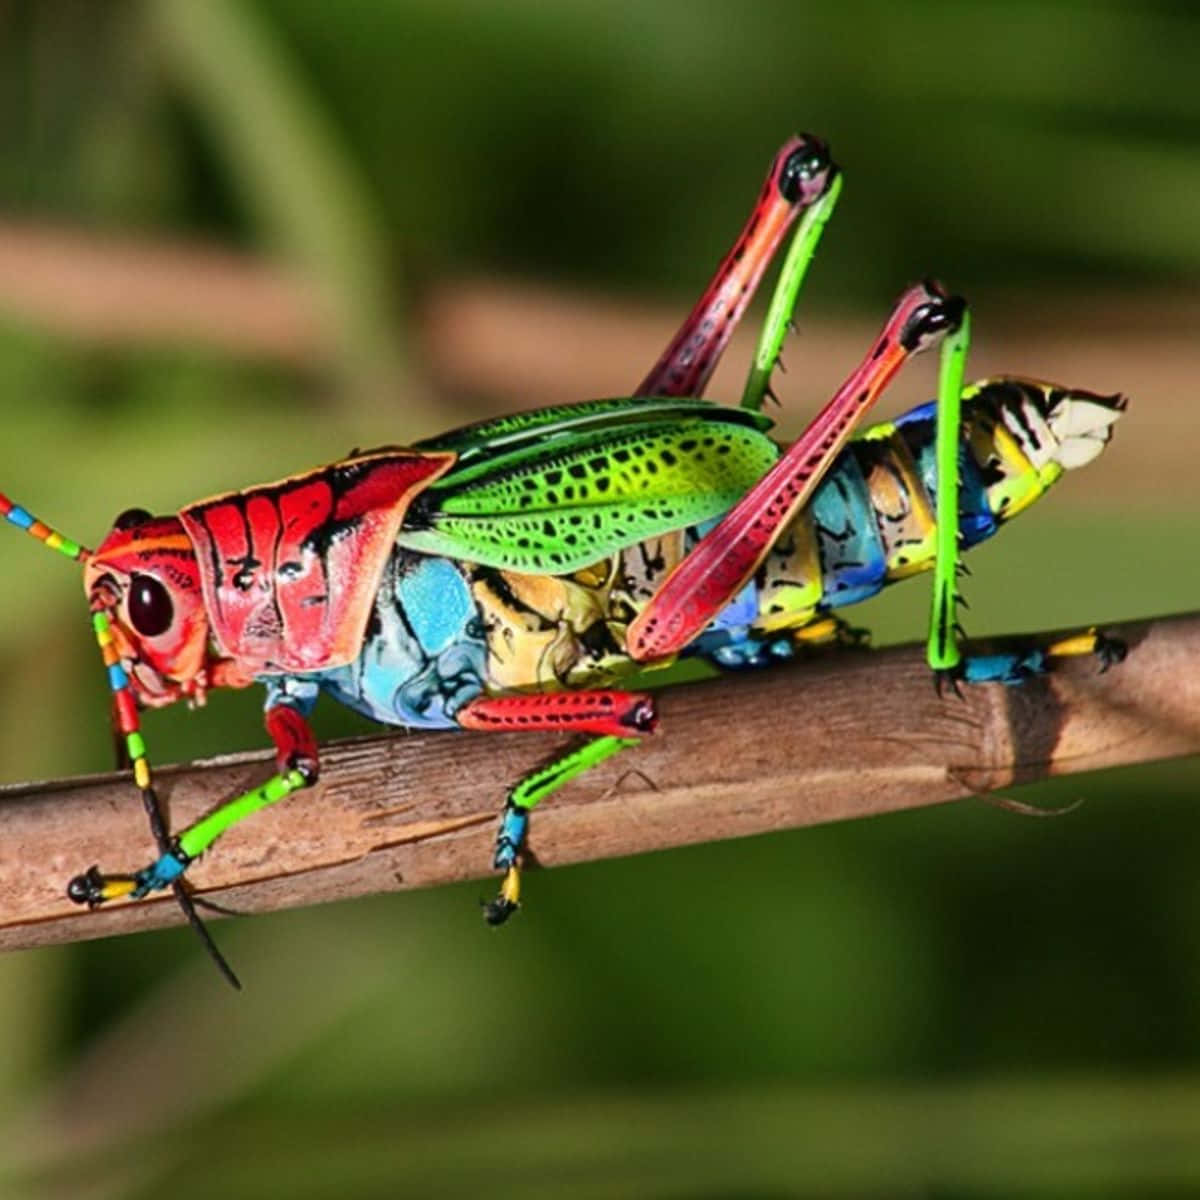 A close-up shot of a vivid green grasshopper resting on a leaf